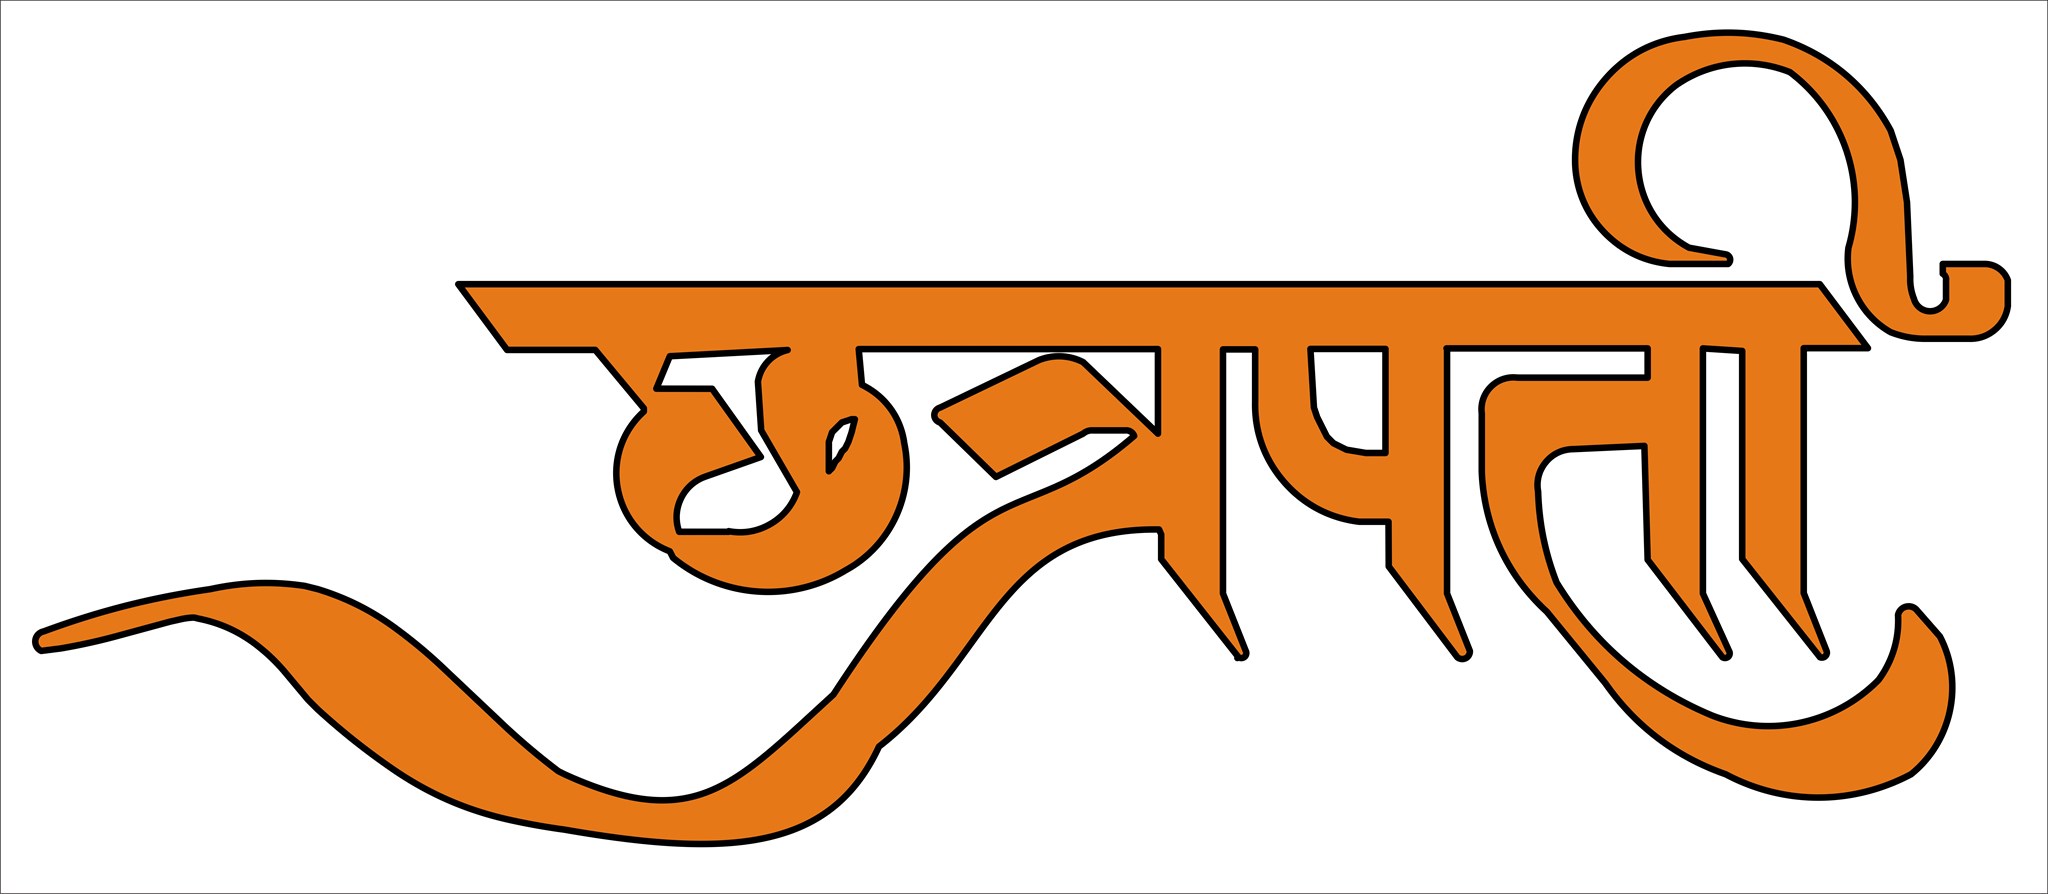 chatrapati name logo